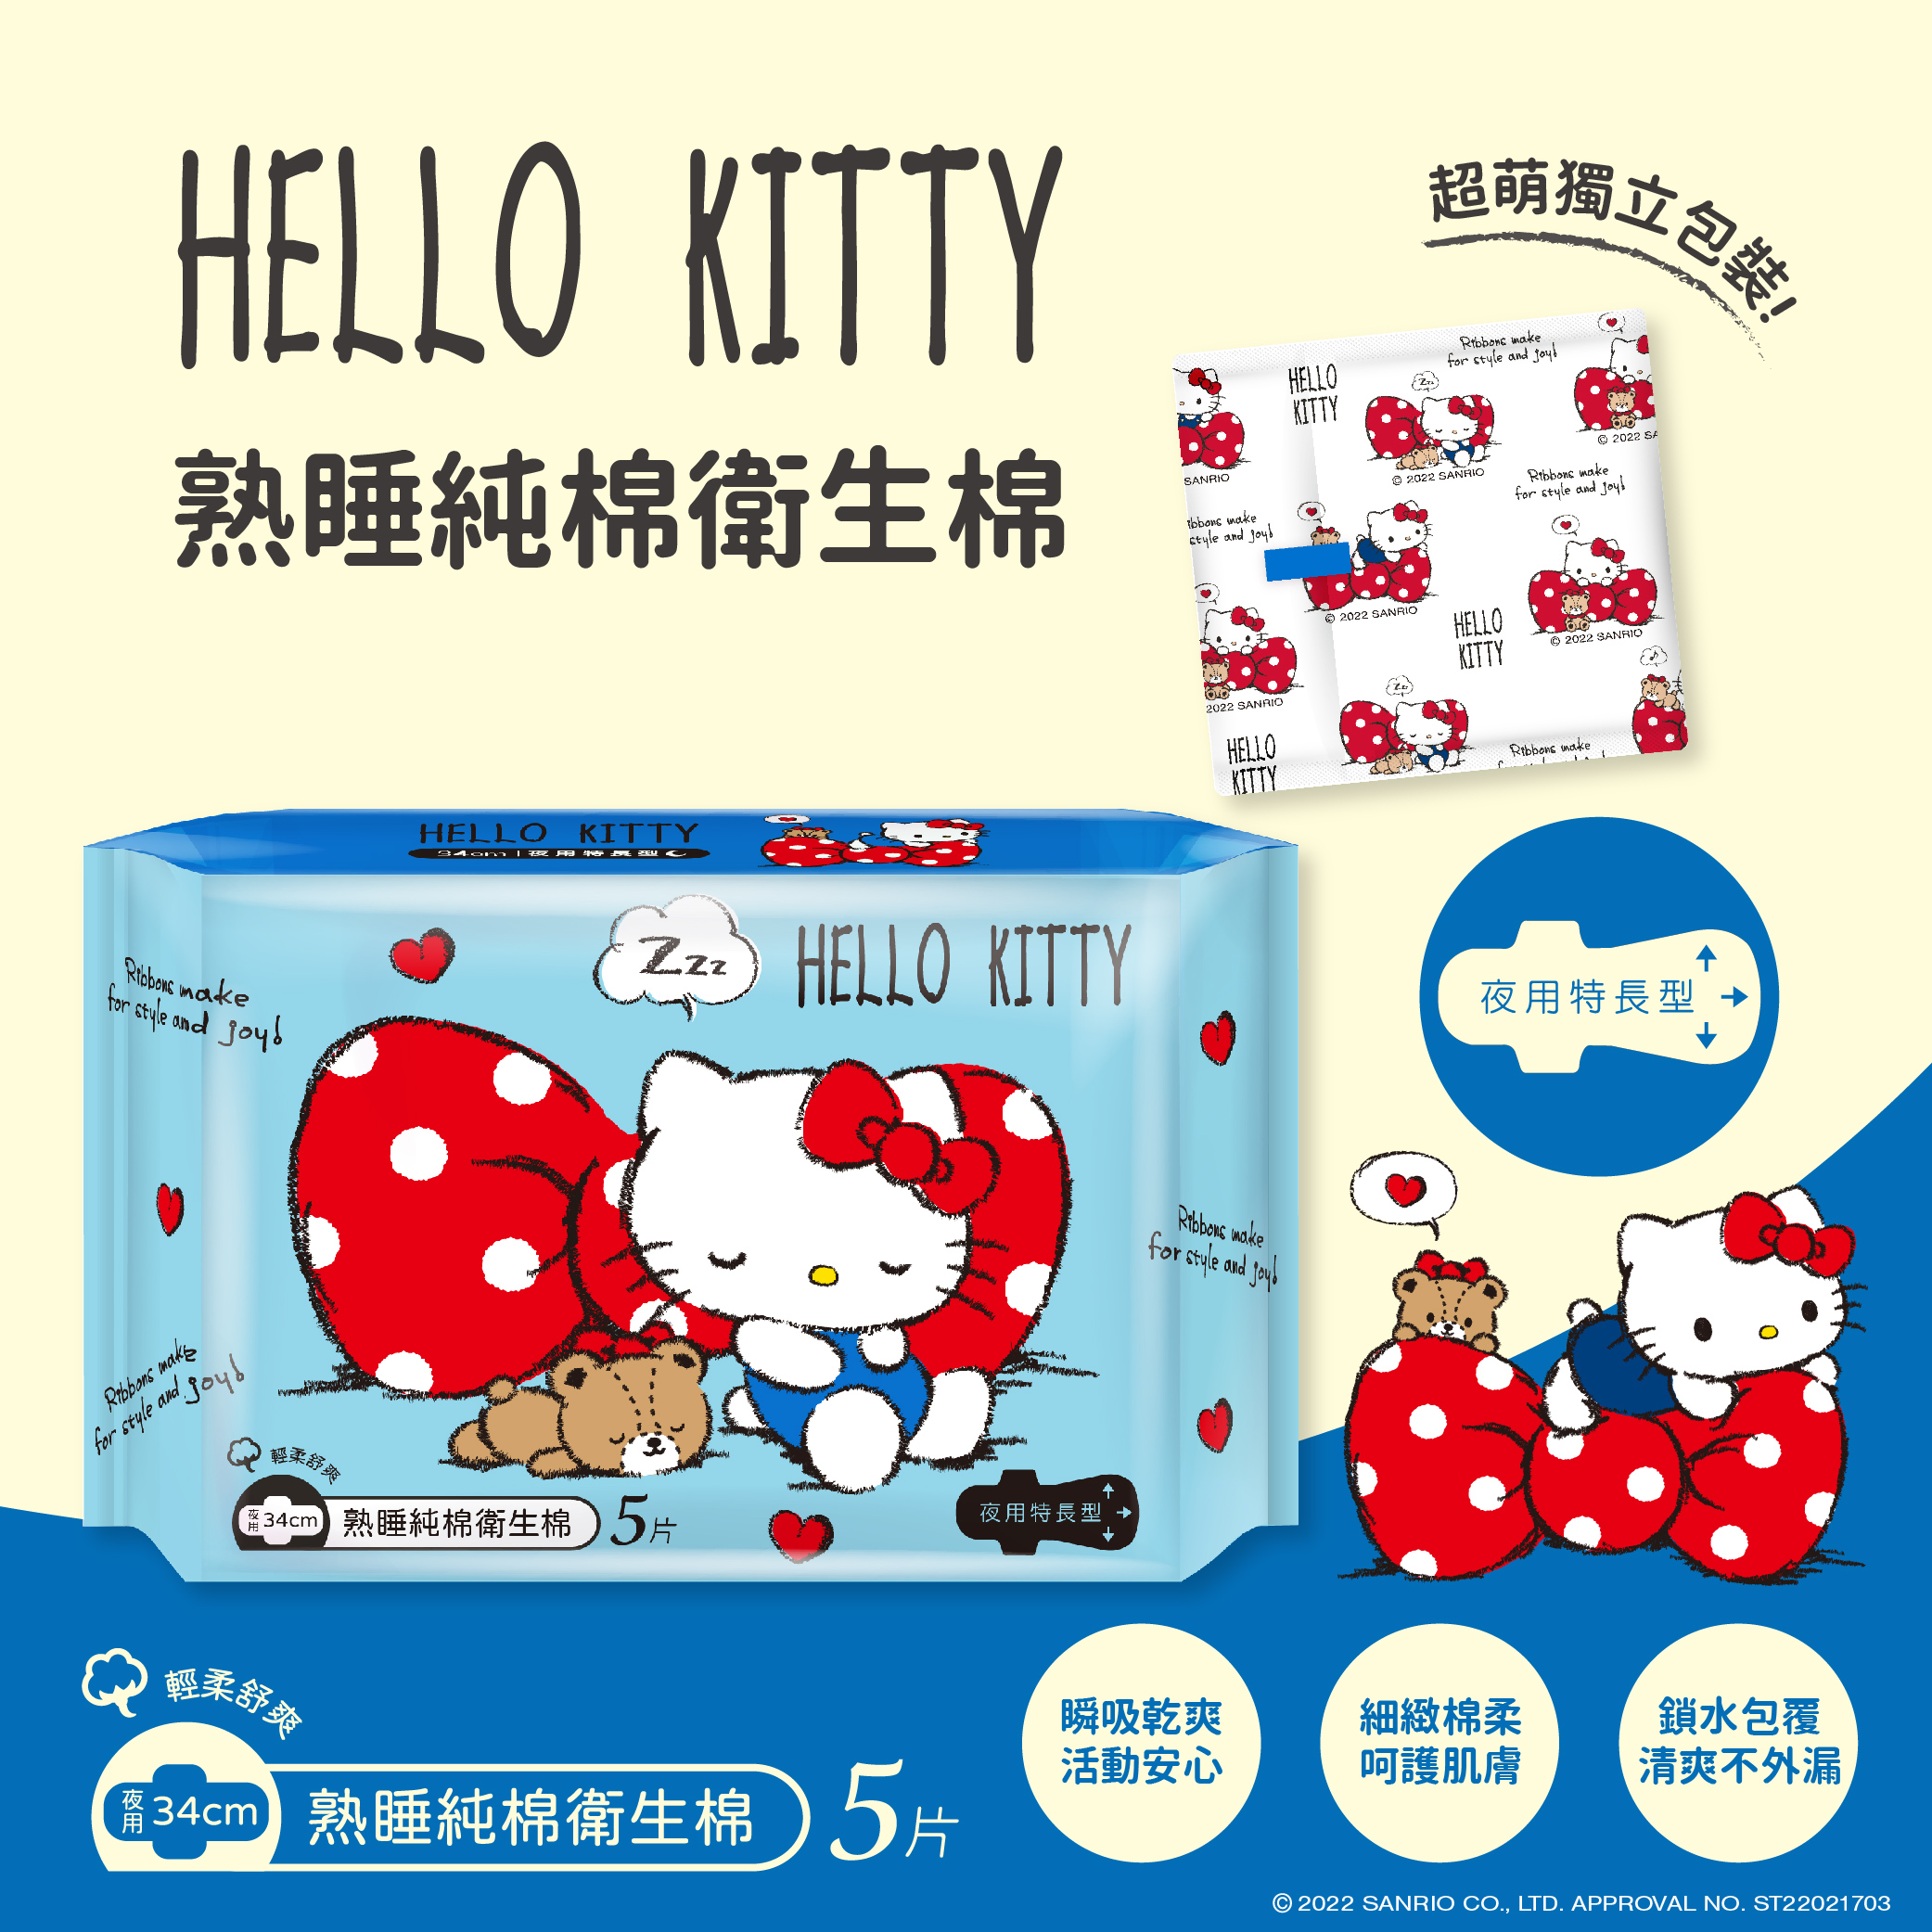 【HELLO KITTY】純棉衛生棉4入收納包組 護墊/日用/夜用